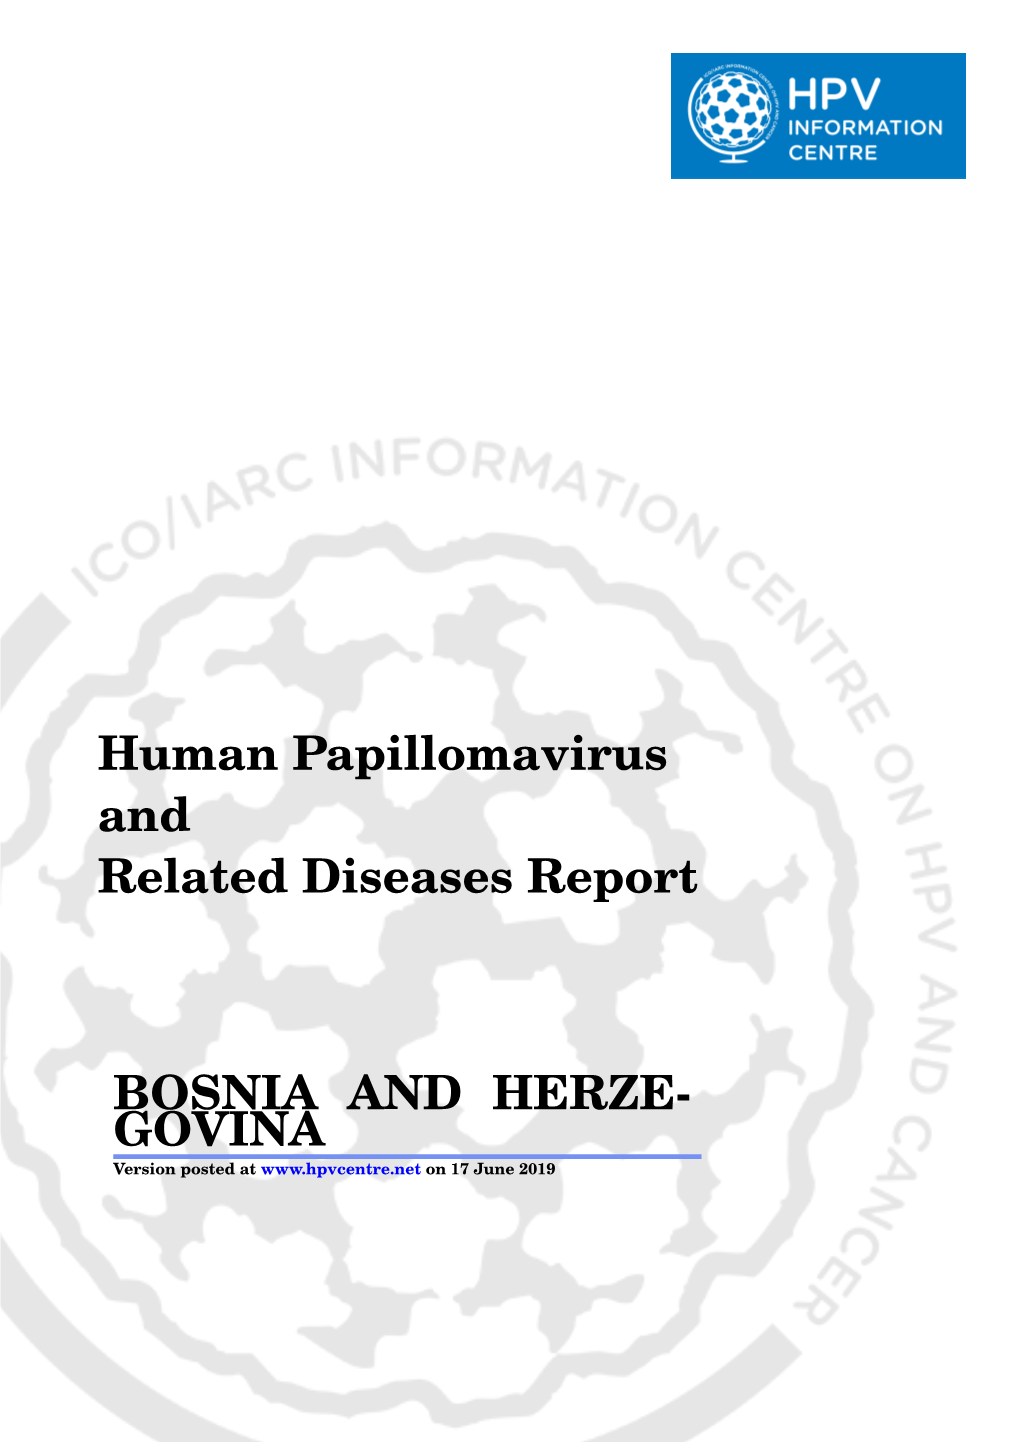 Human Papillomavirus and Related Diseases Report BOSNIA AND